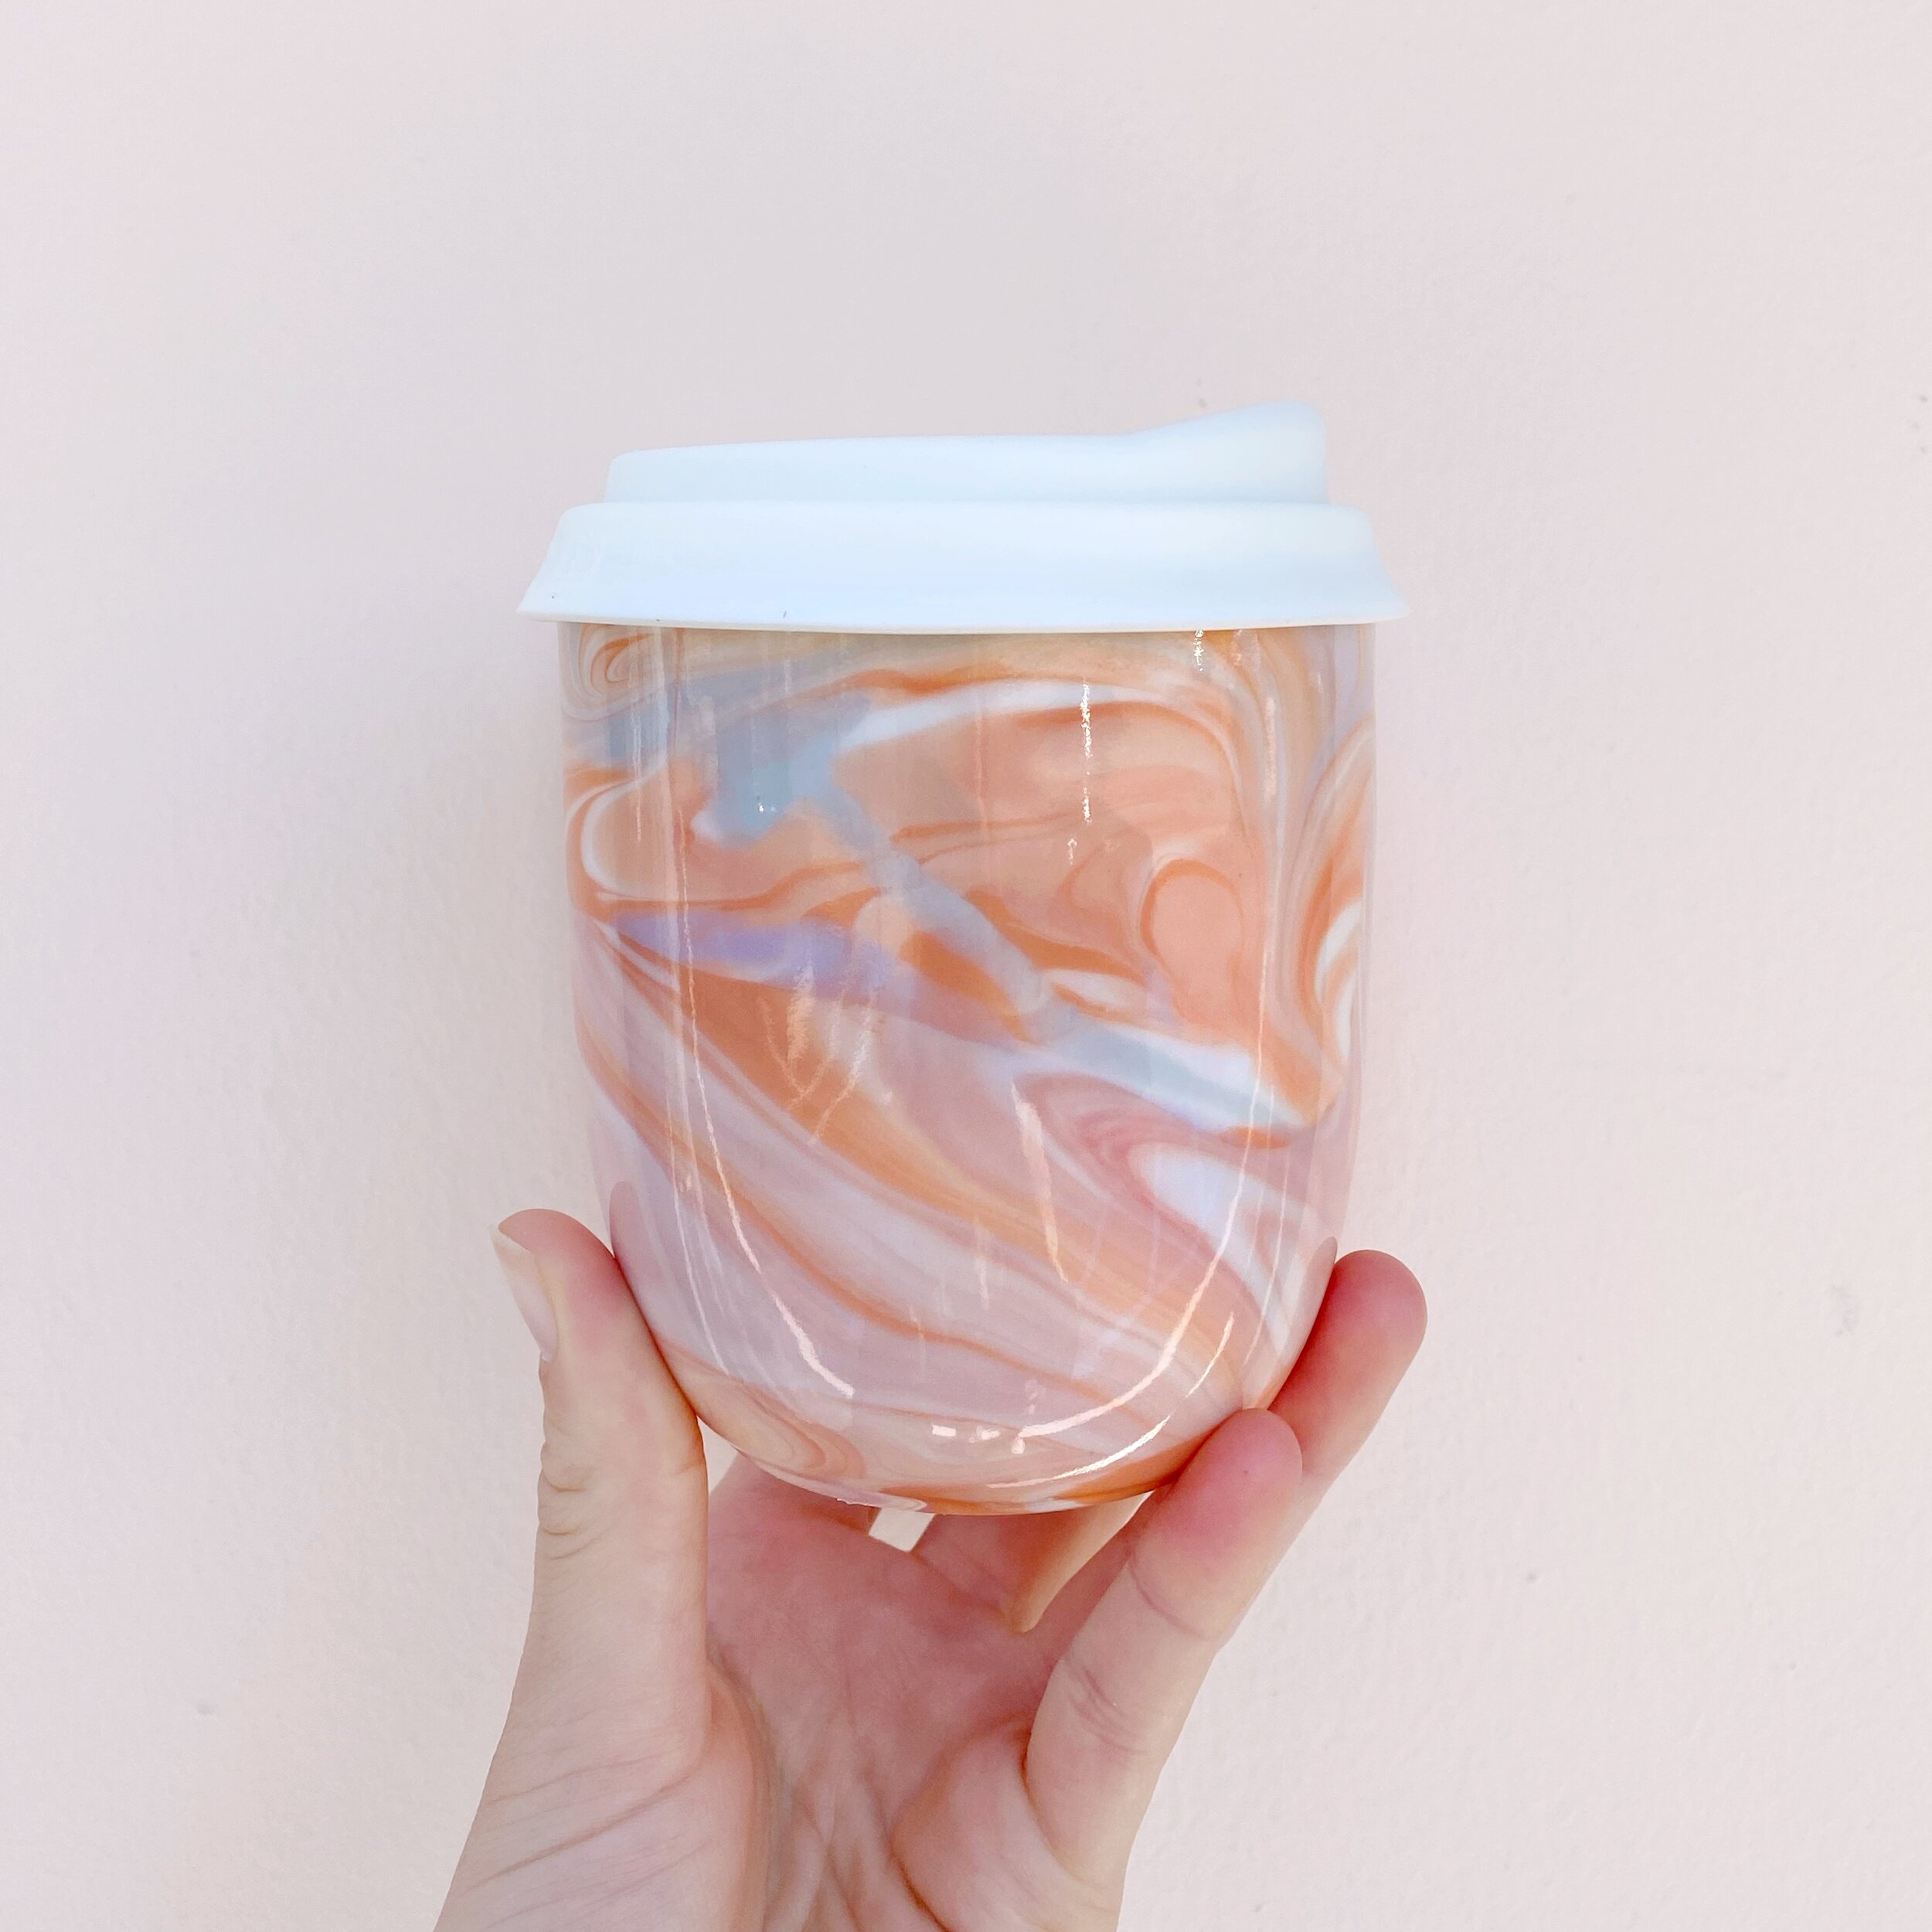 Sunset-Inspired Travel Mugs : Handmade Sunset To-Go Cup